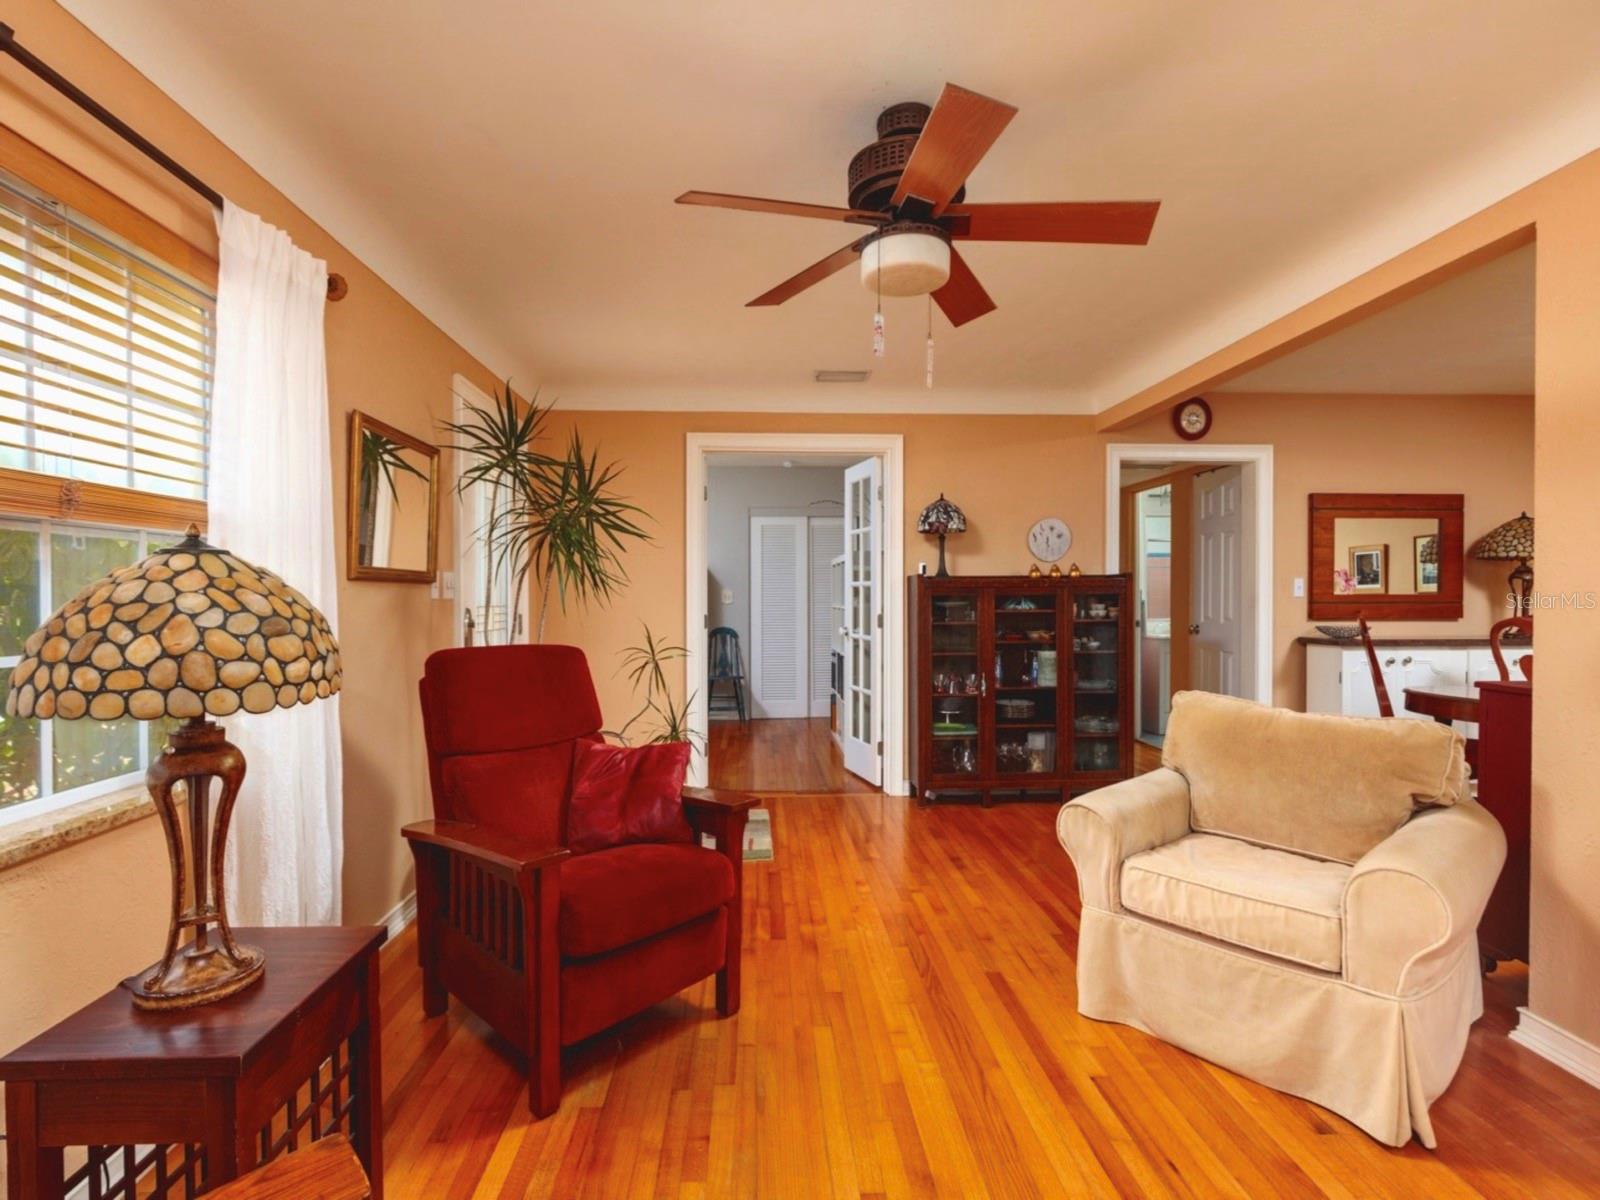 Living Room with Original Hardwood Floors